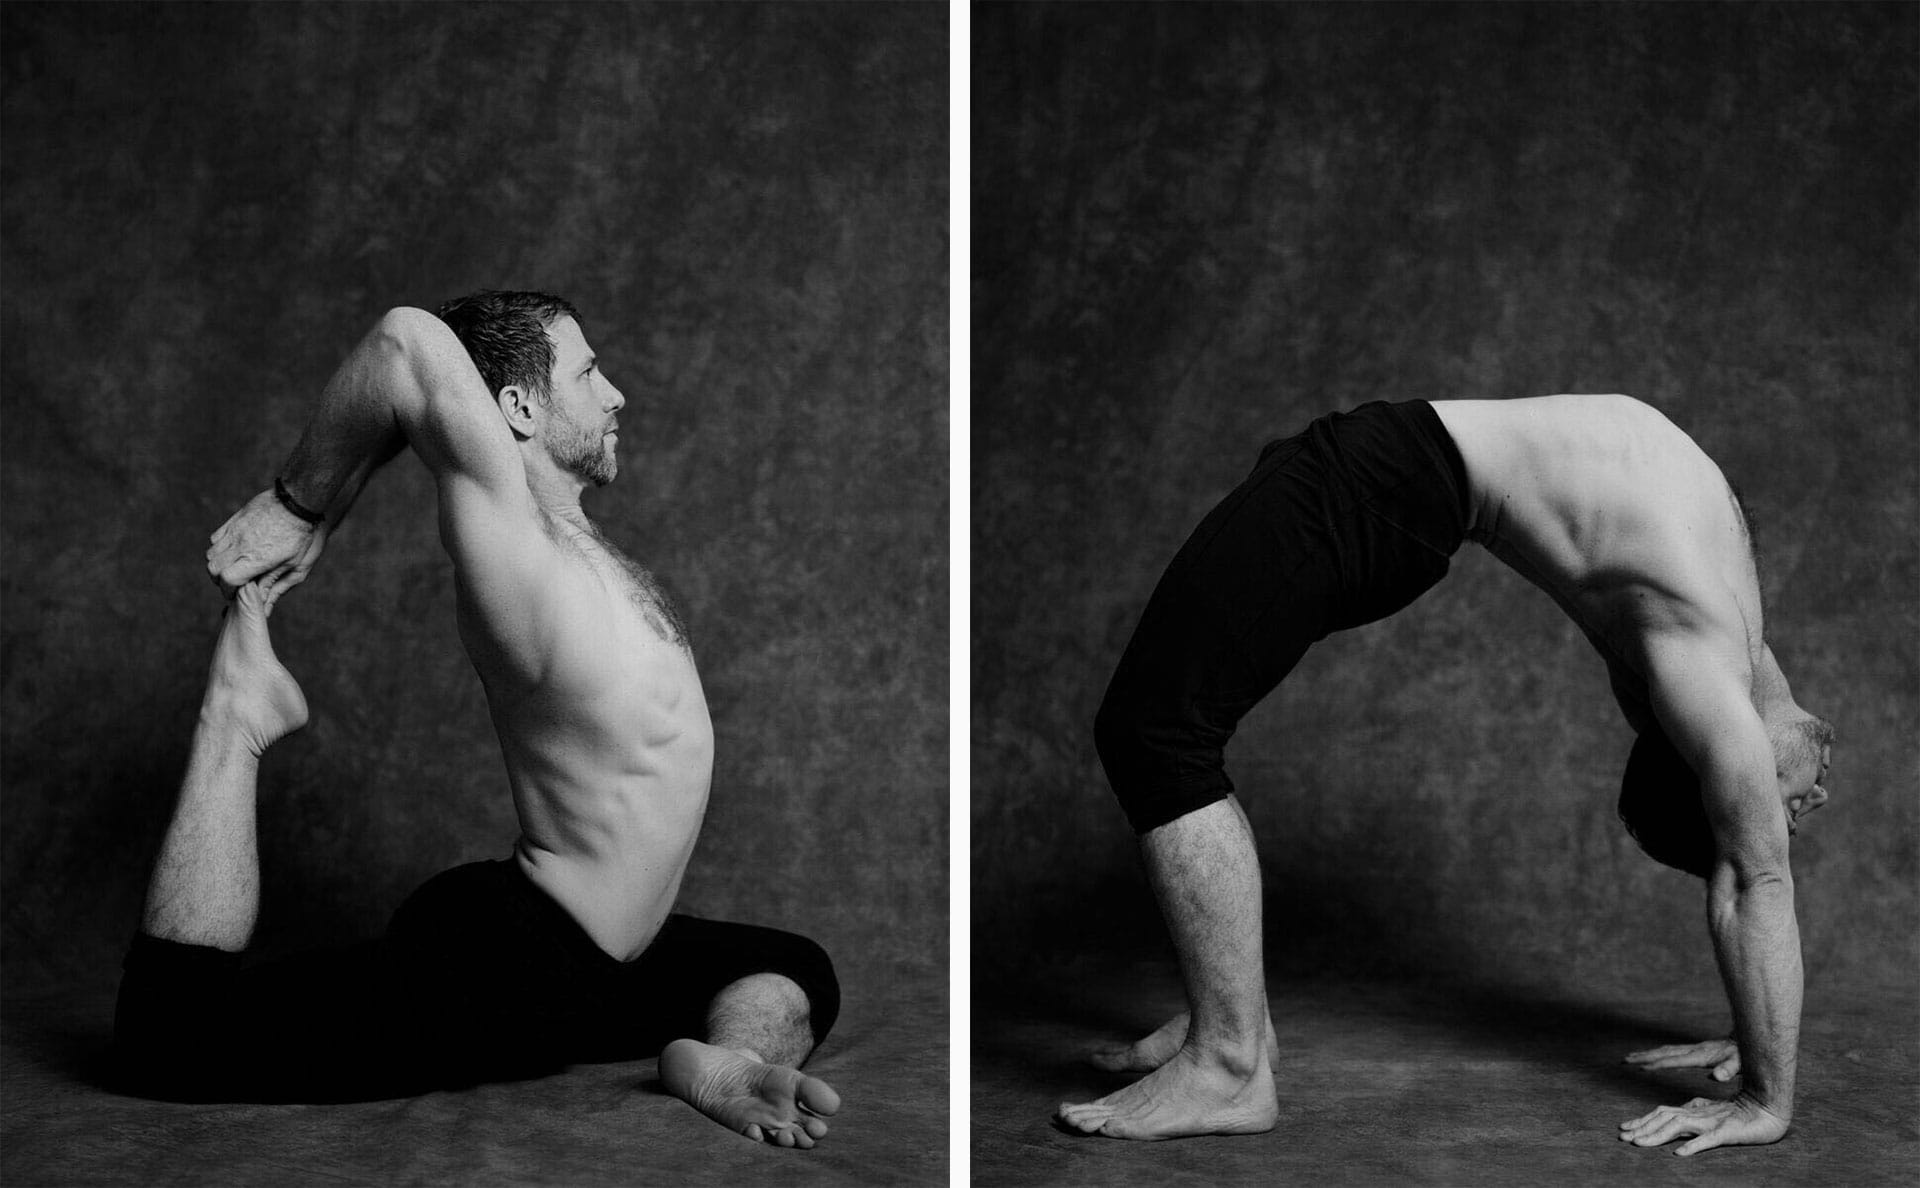 Pure Yoga's founding teacher Patrick Creelman